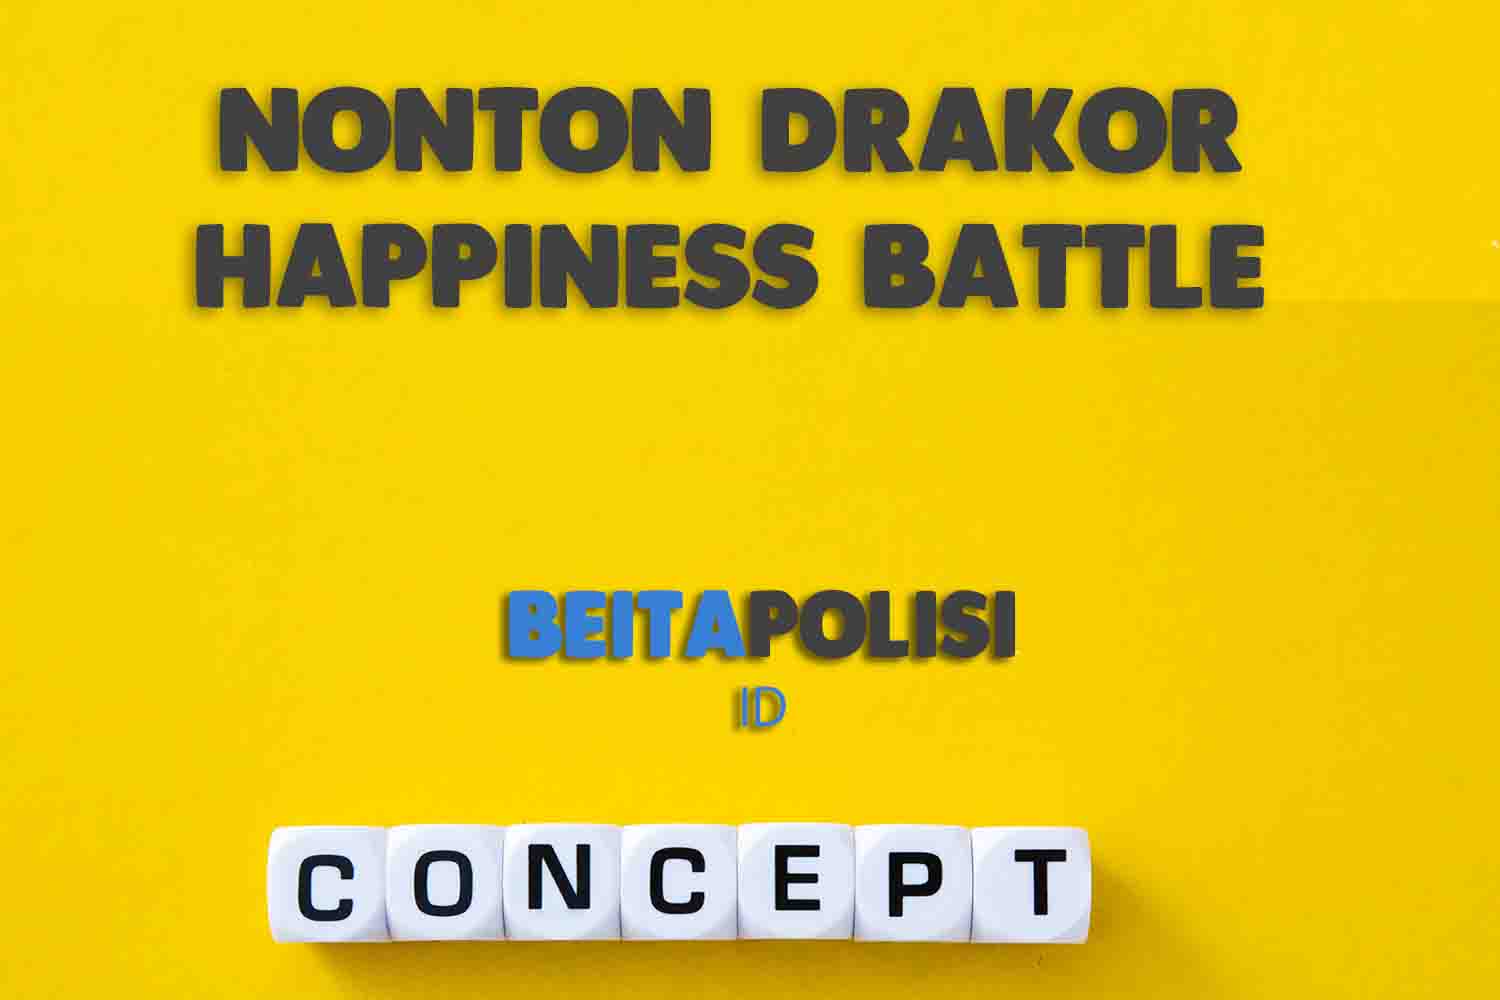 Nonton Drakor Happiness Battle Episode 15 Sub Indo Cerita Semakin Menarik Di Episode Ini